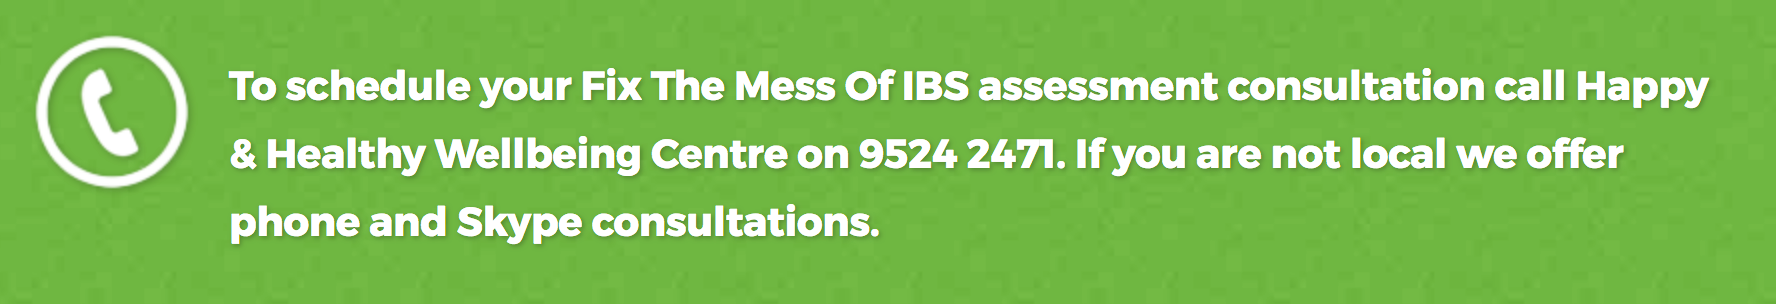 IBS-assessment